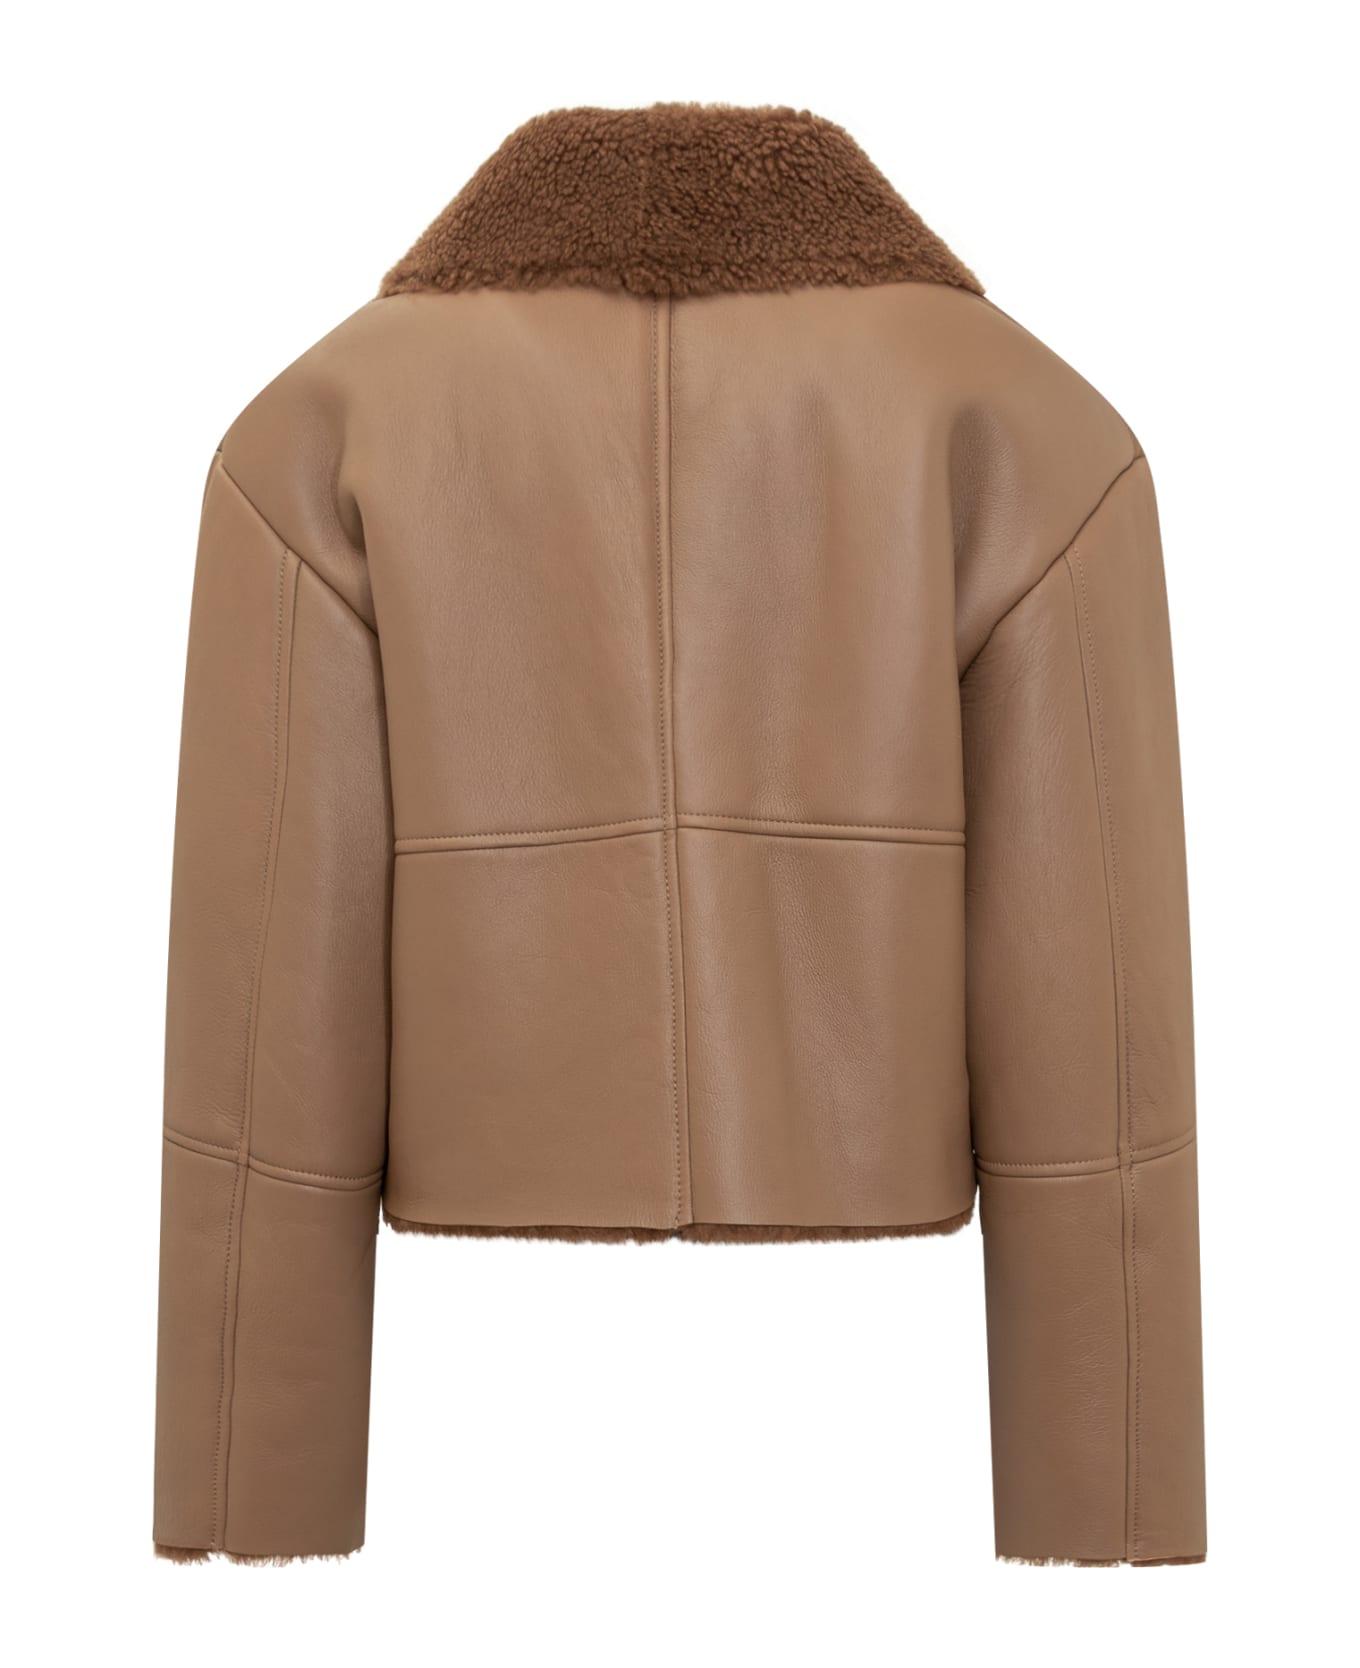 Loulou Studio Jacket With Fur - BROWN ジャケット